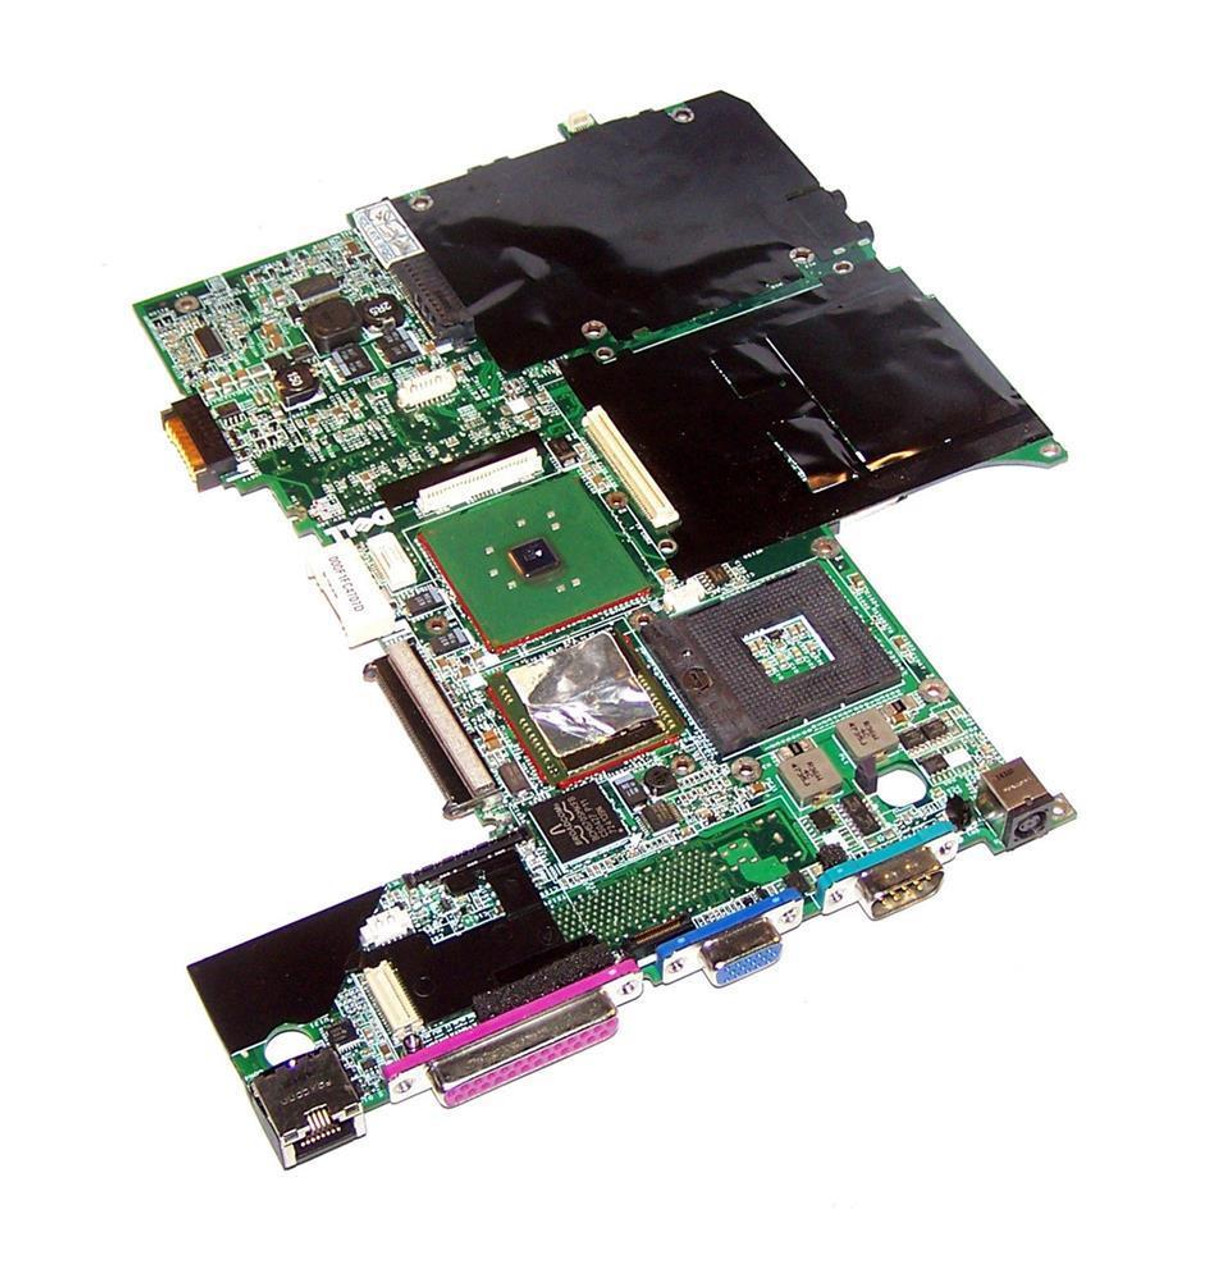 03U895 Dell System Board (Motherboard) for Inspiron 600m, Latitude D600 (Refurbished)